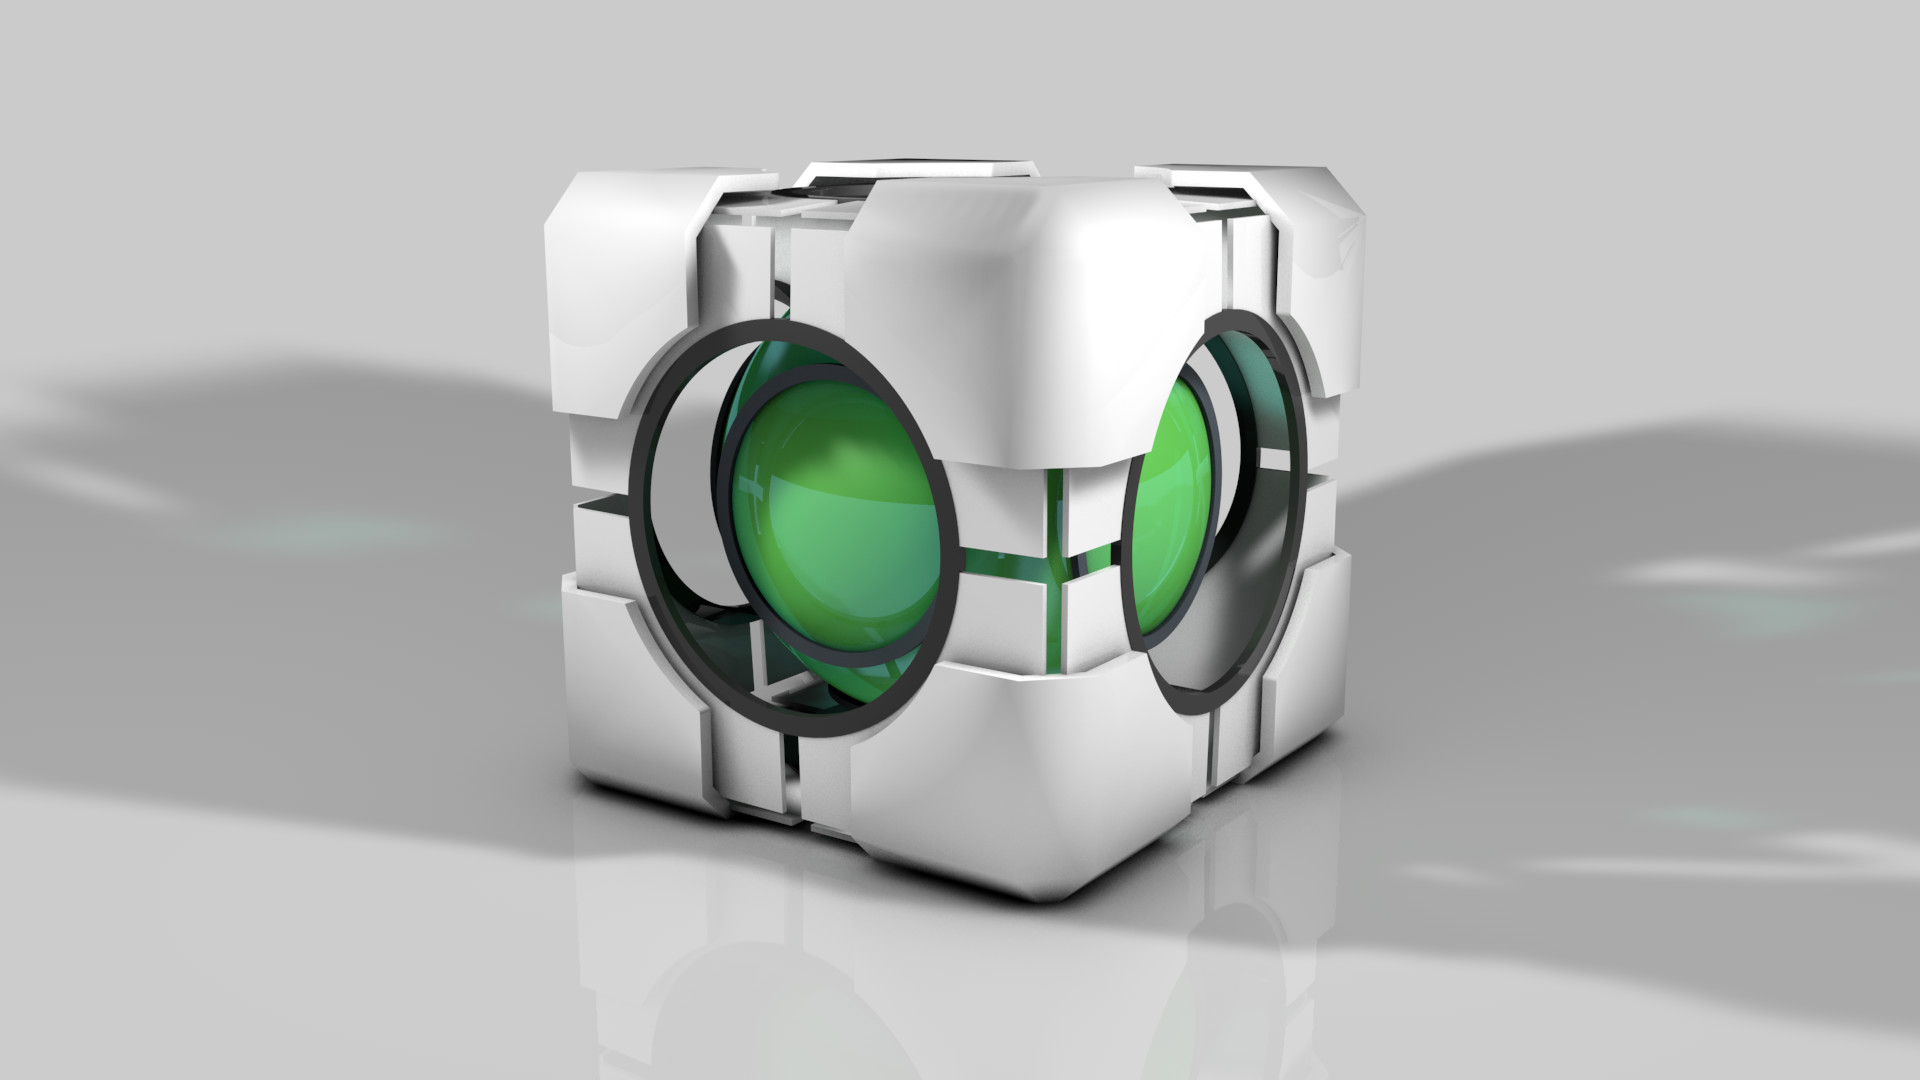 1920x1080 ... TechFlashDesigns 3D Portal Cube - Wallpaper by TechFlashDesigns